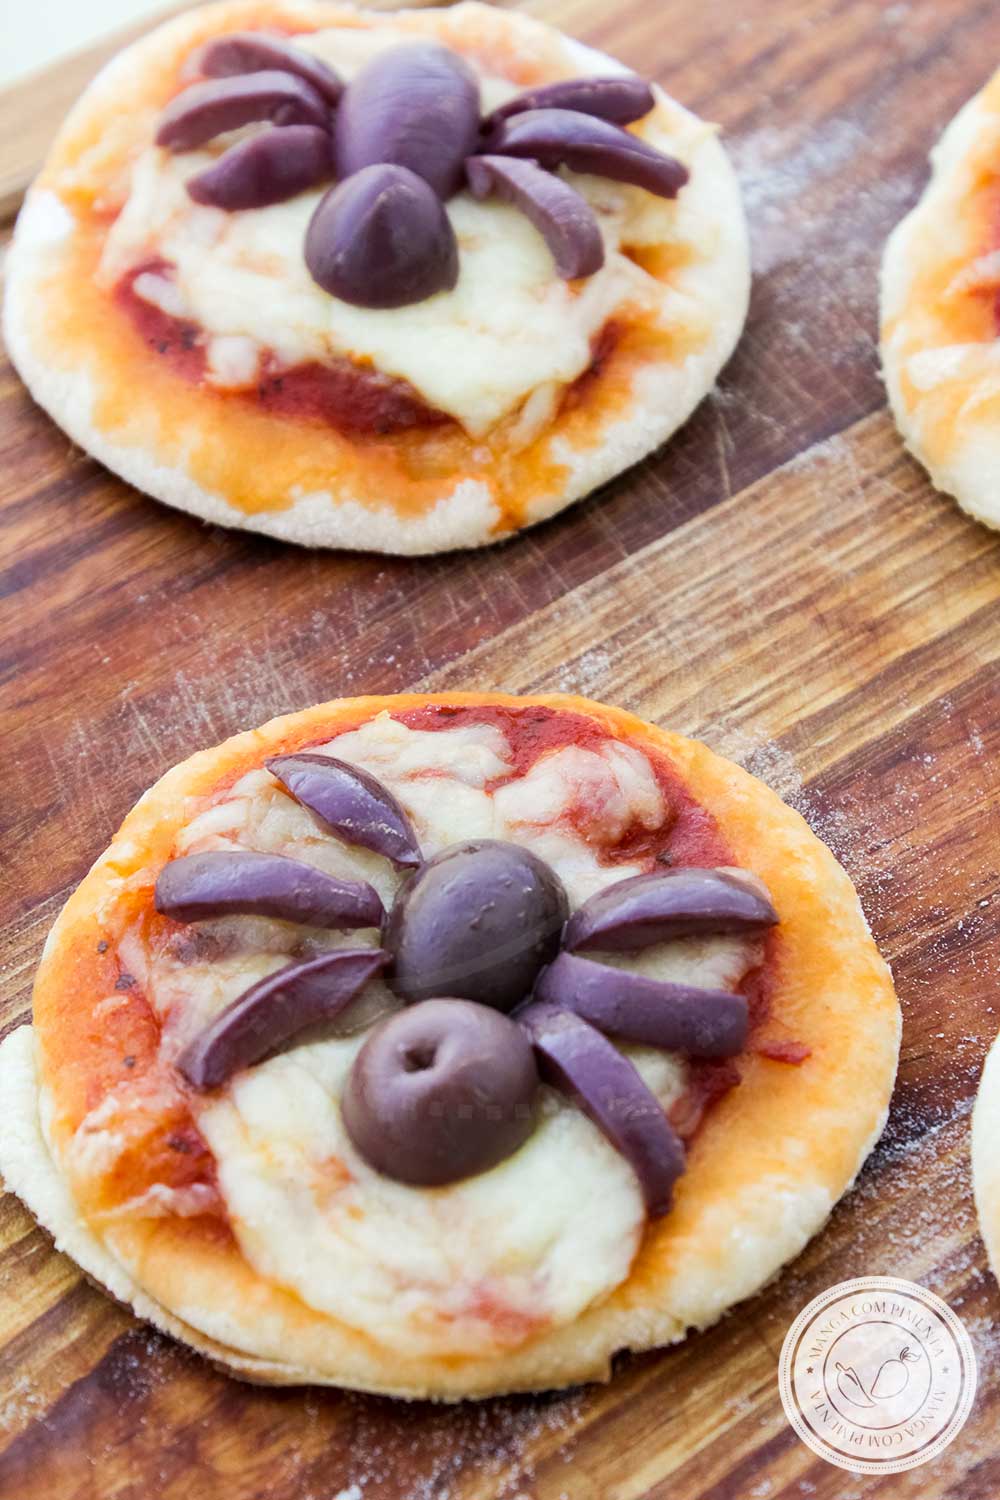 Receita de Mini Pizzas sabor Aranha - para o lanche das bruxas e magos que moram na sua casa!